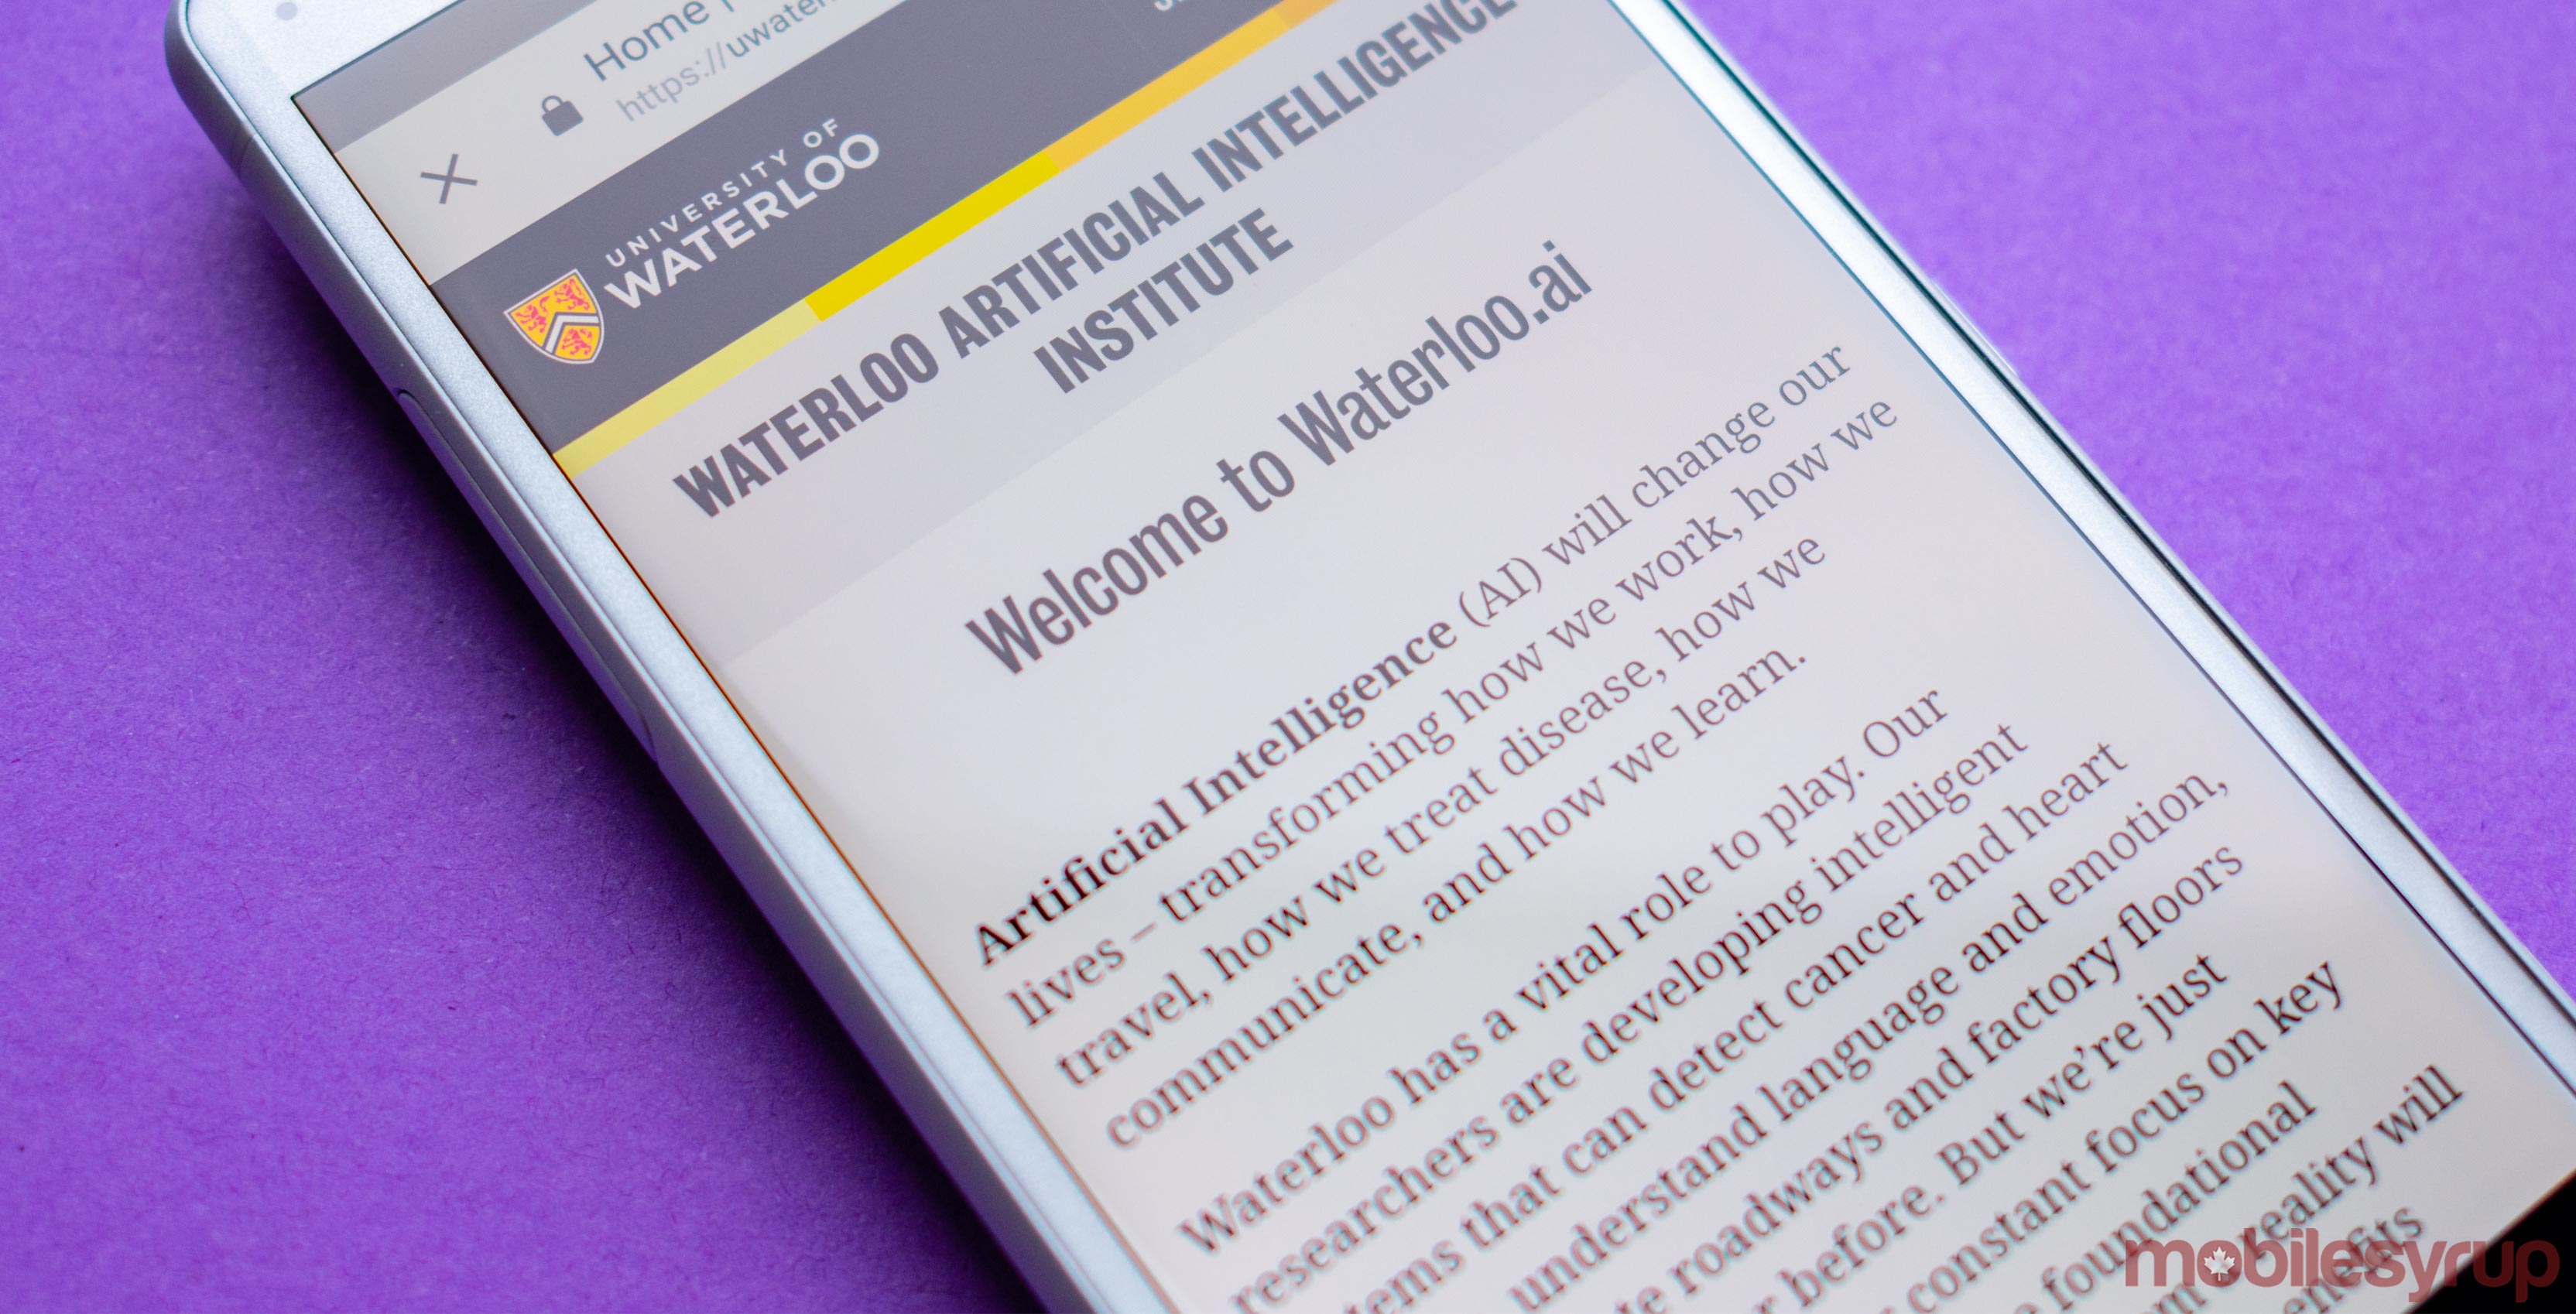 Waterloo AI Institute